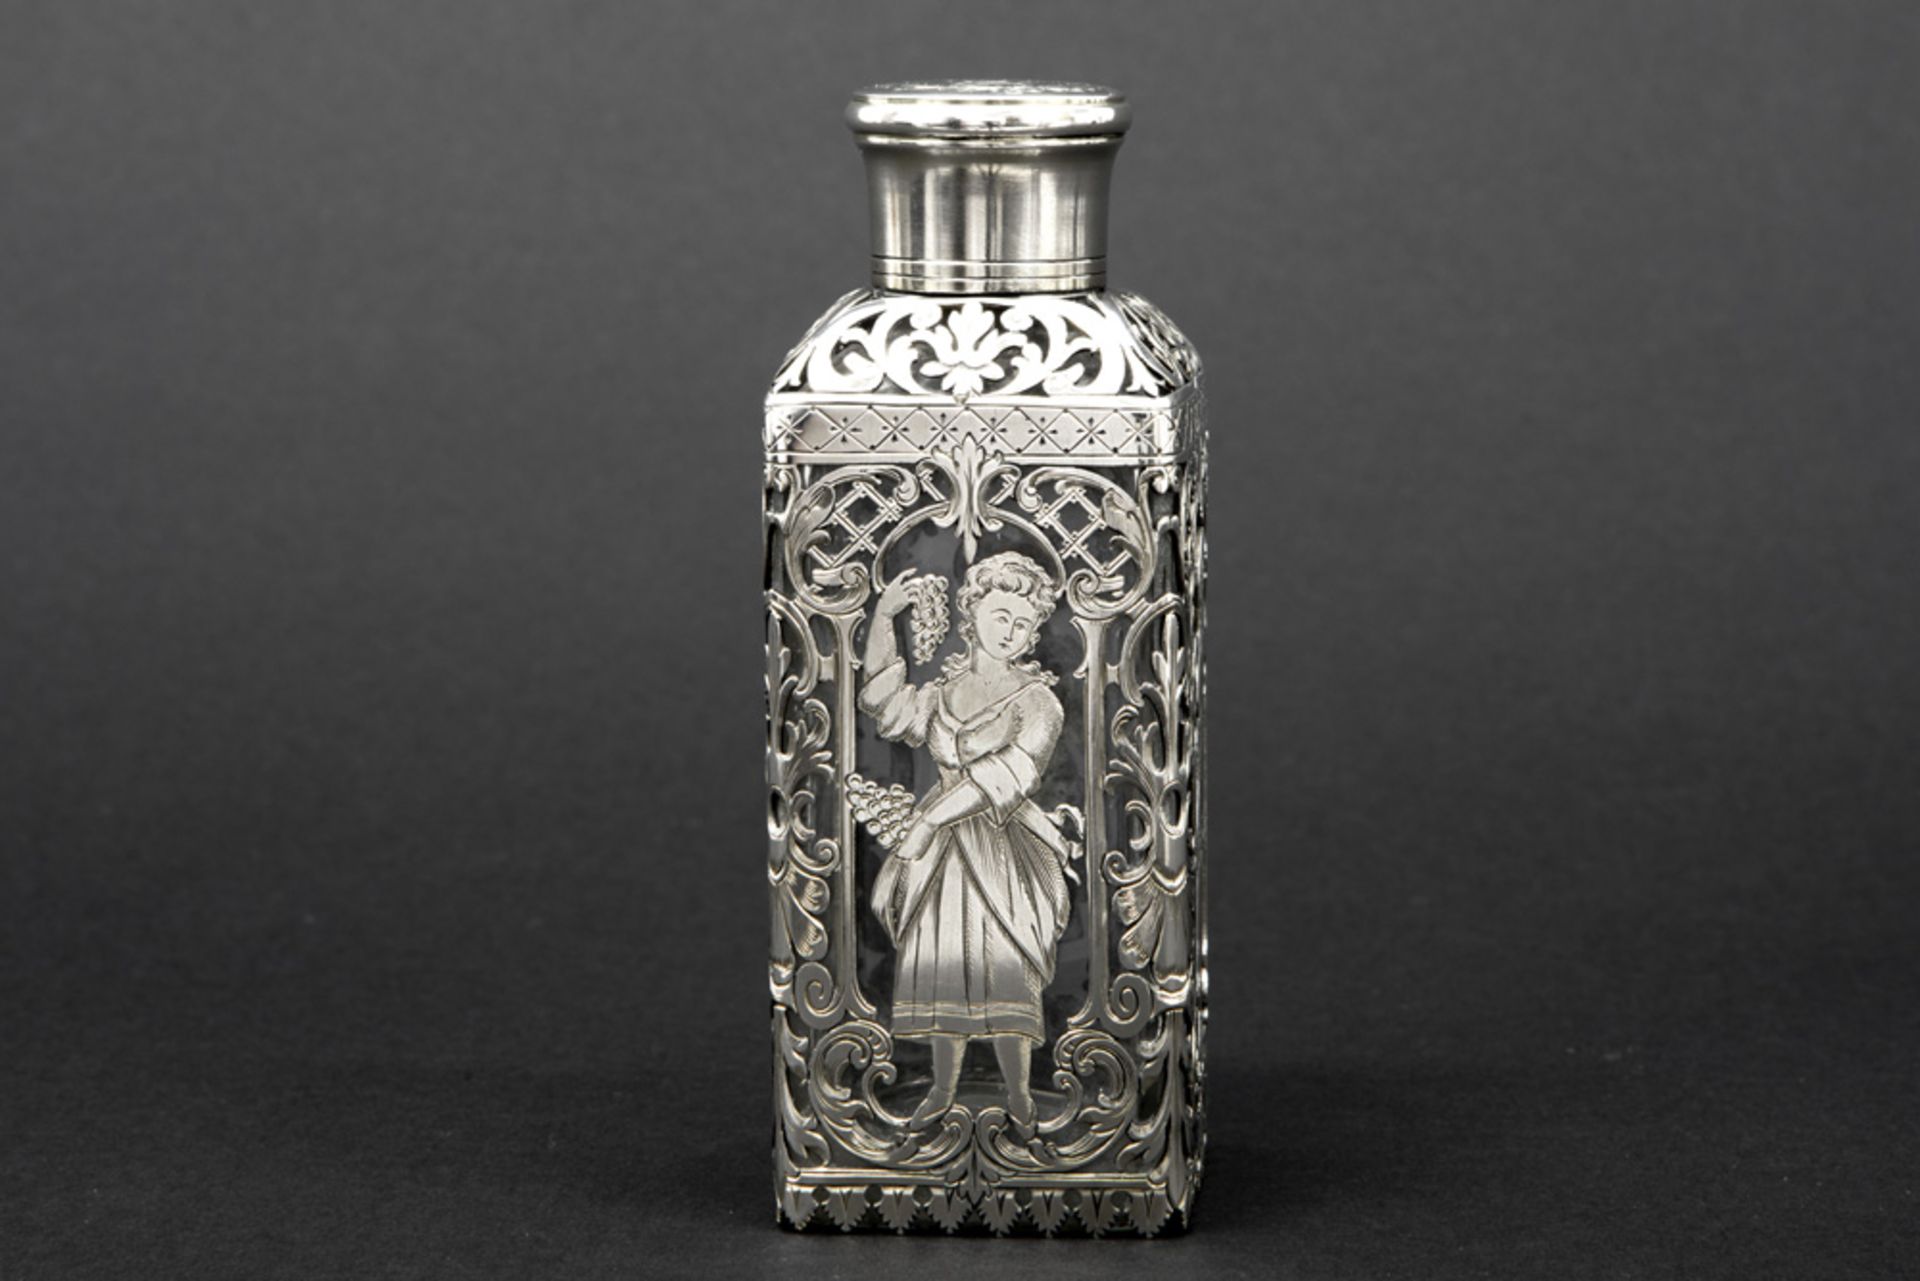 antique perfume bottle in clear glass and marked silver || Antieke flacon in kleurloos kristalglas